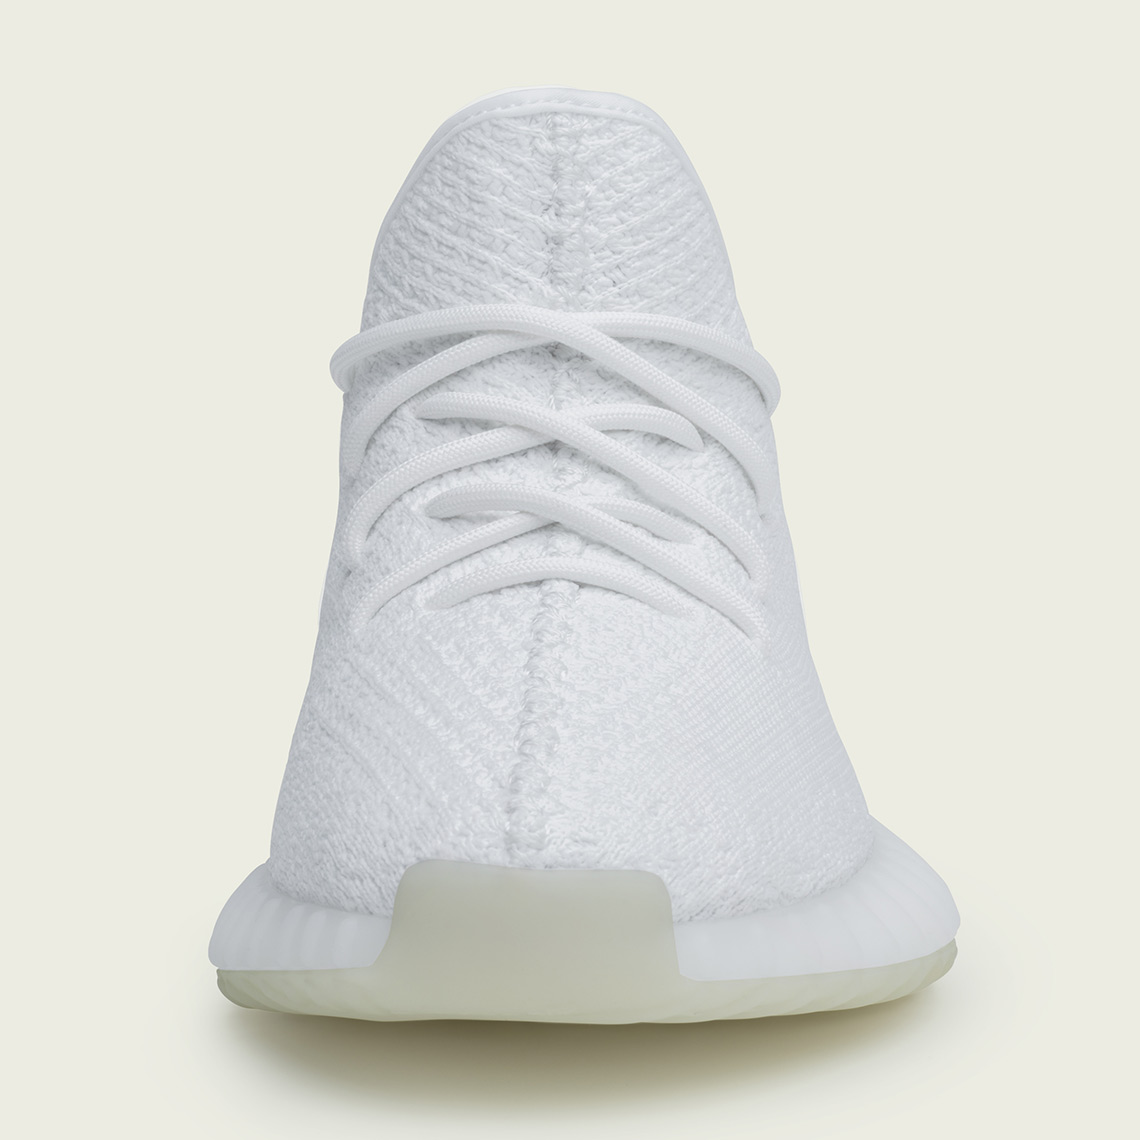 Adidas Yeezy White Release Info 3